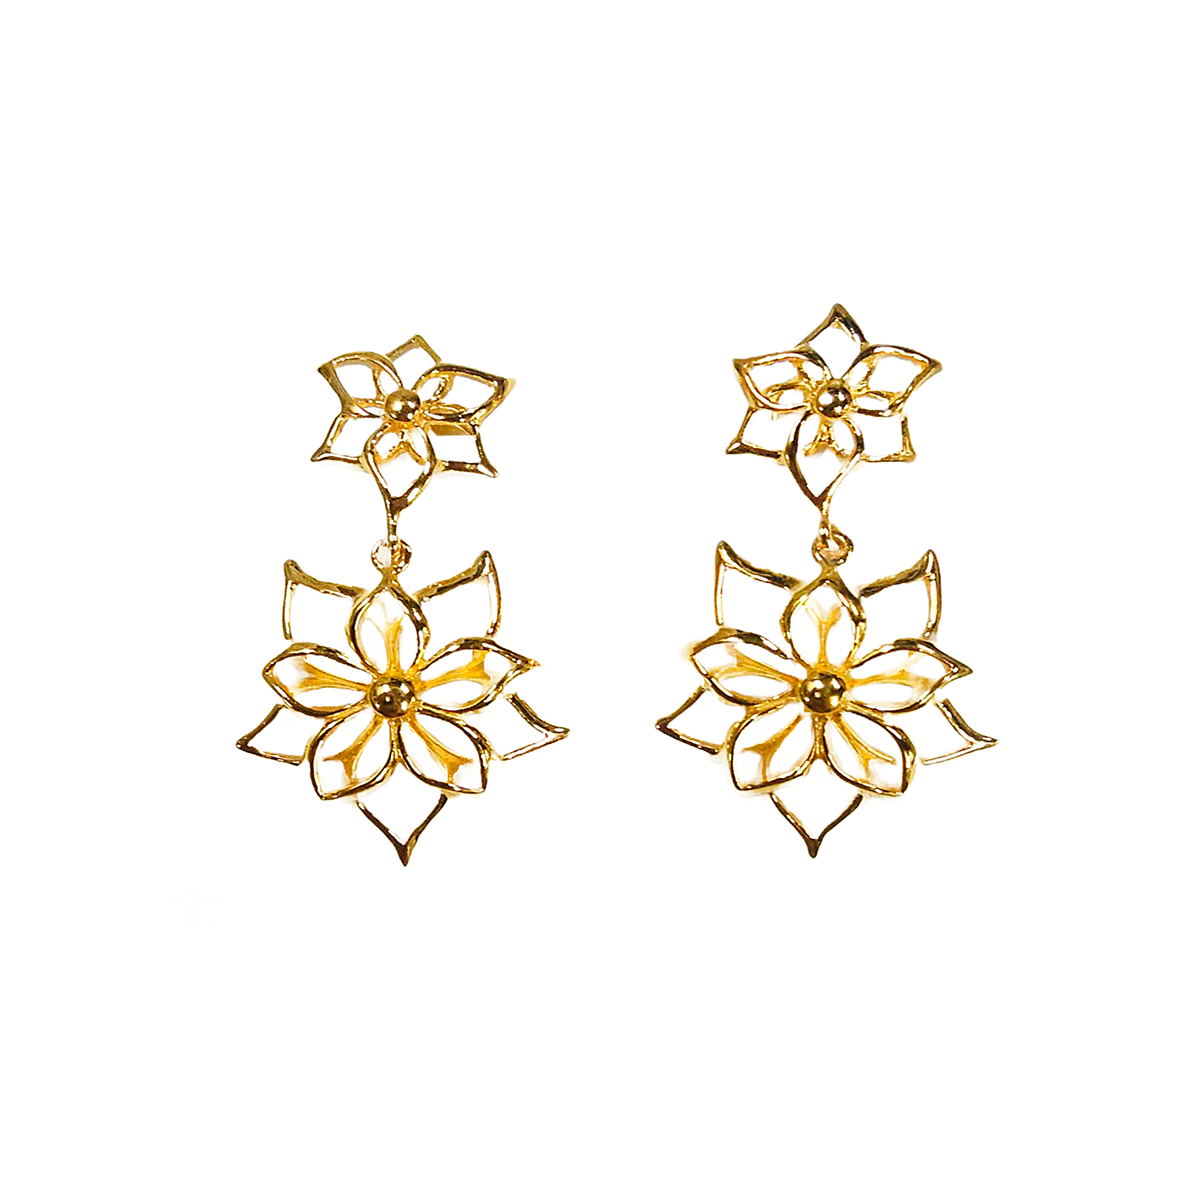 The Promise gold earrings